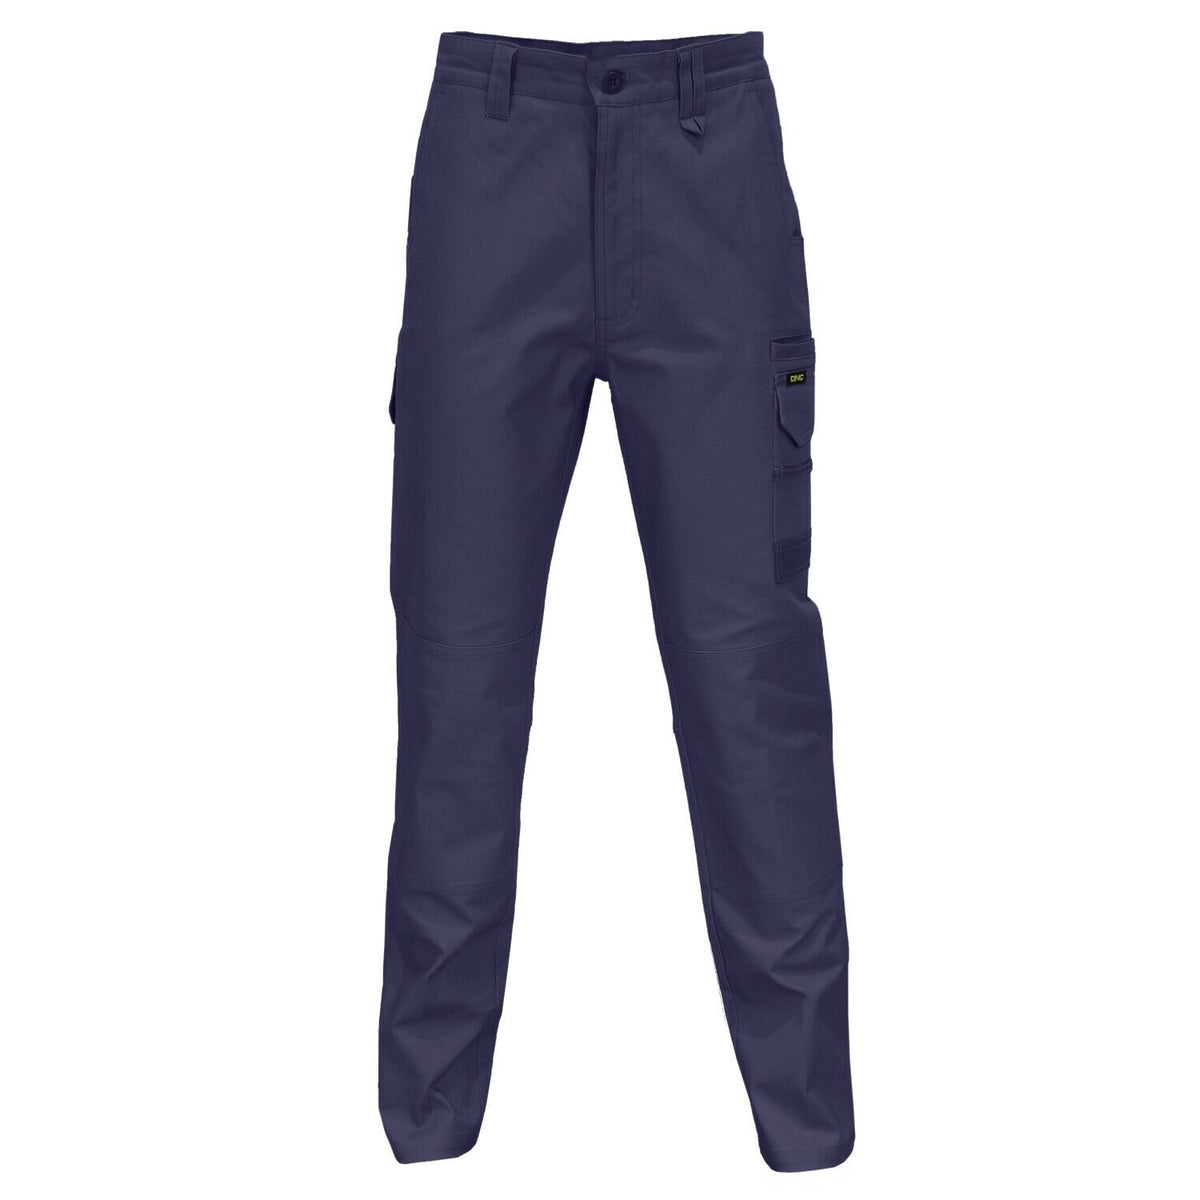 DNC Workwear Men SlimFlex Tradie Cargo Pants Durable Duck Tough Pant Work 3375